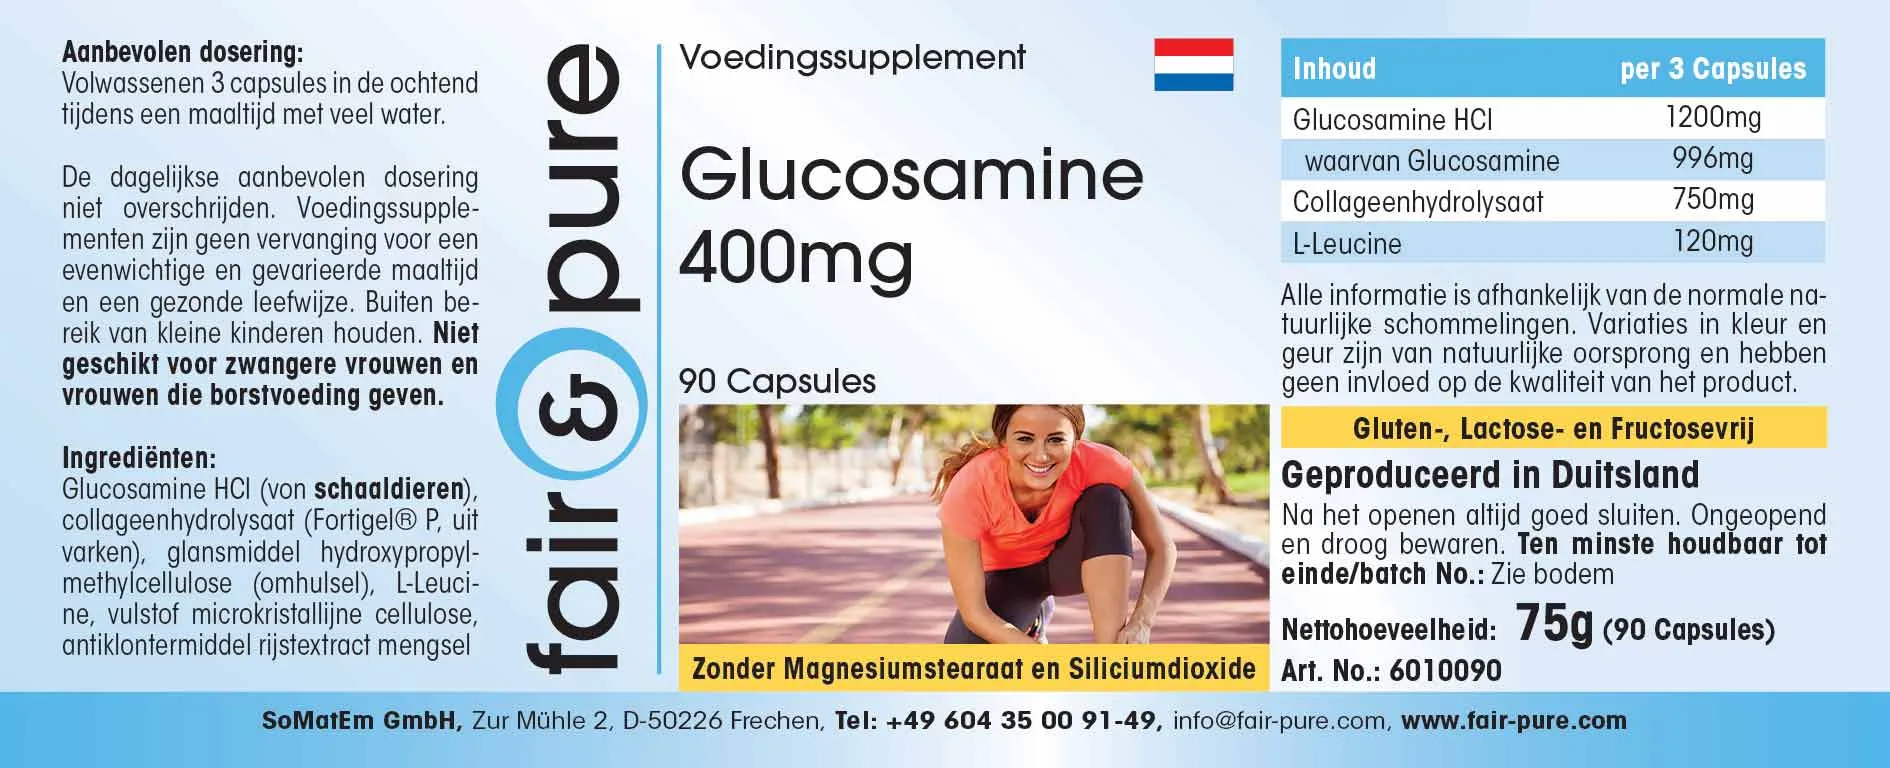 Glucosamina 400mg